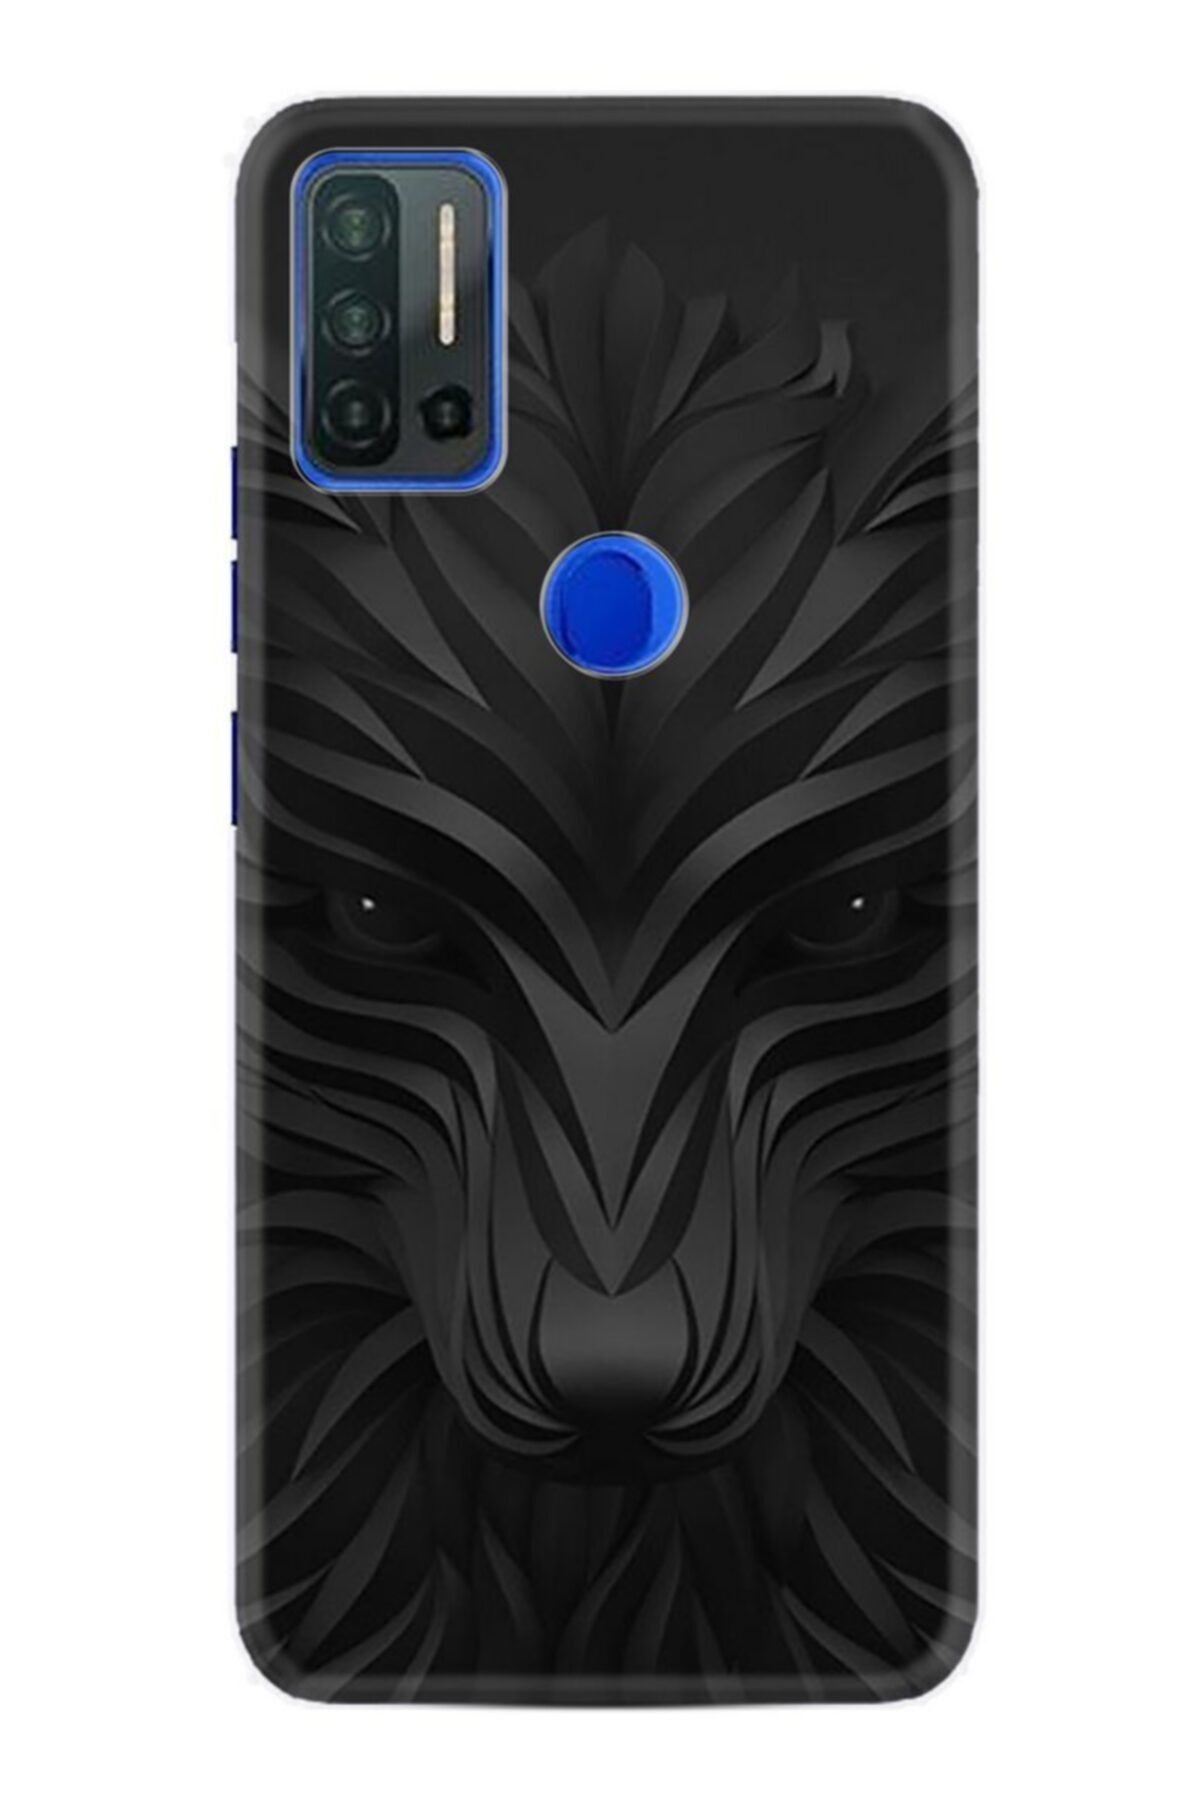 P13 Blue Max Pro Kılıf Desenli Silikon Kılıf Black Fox 1325